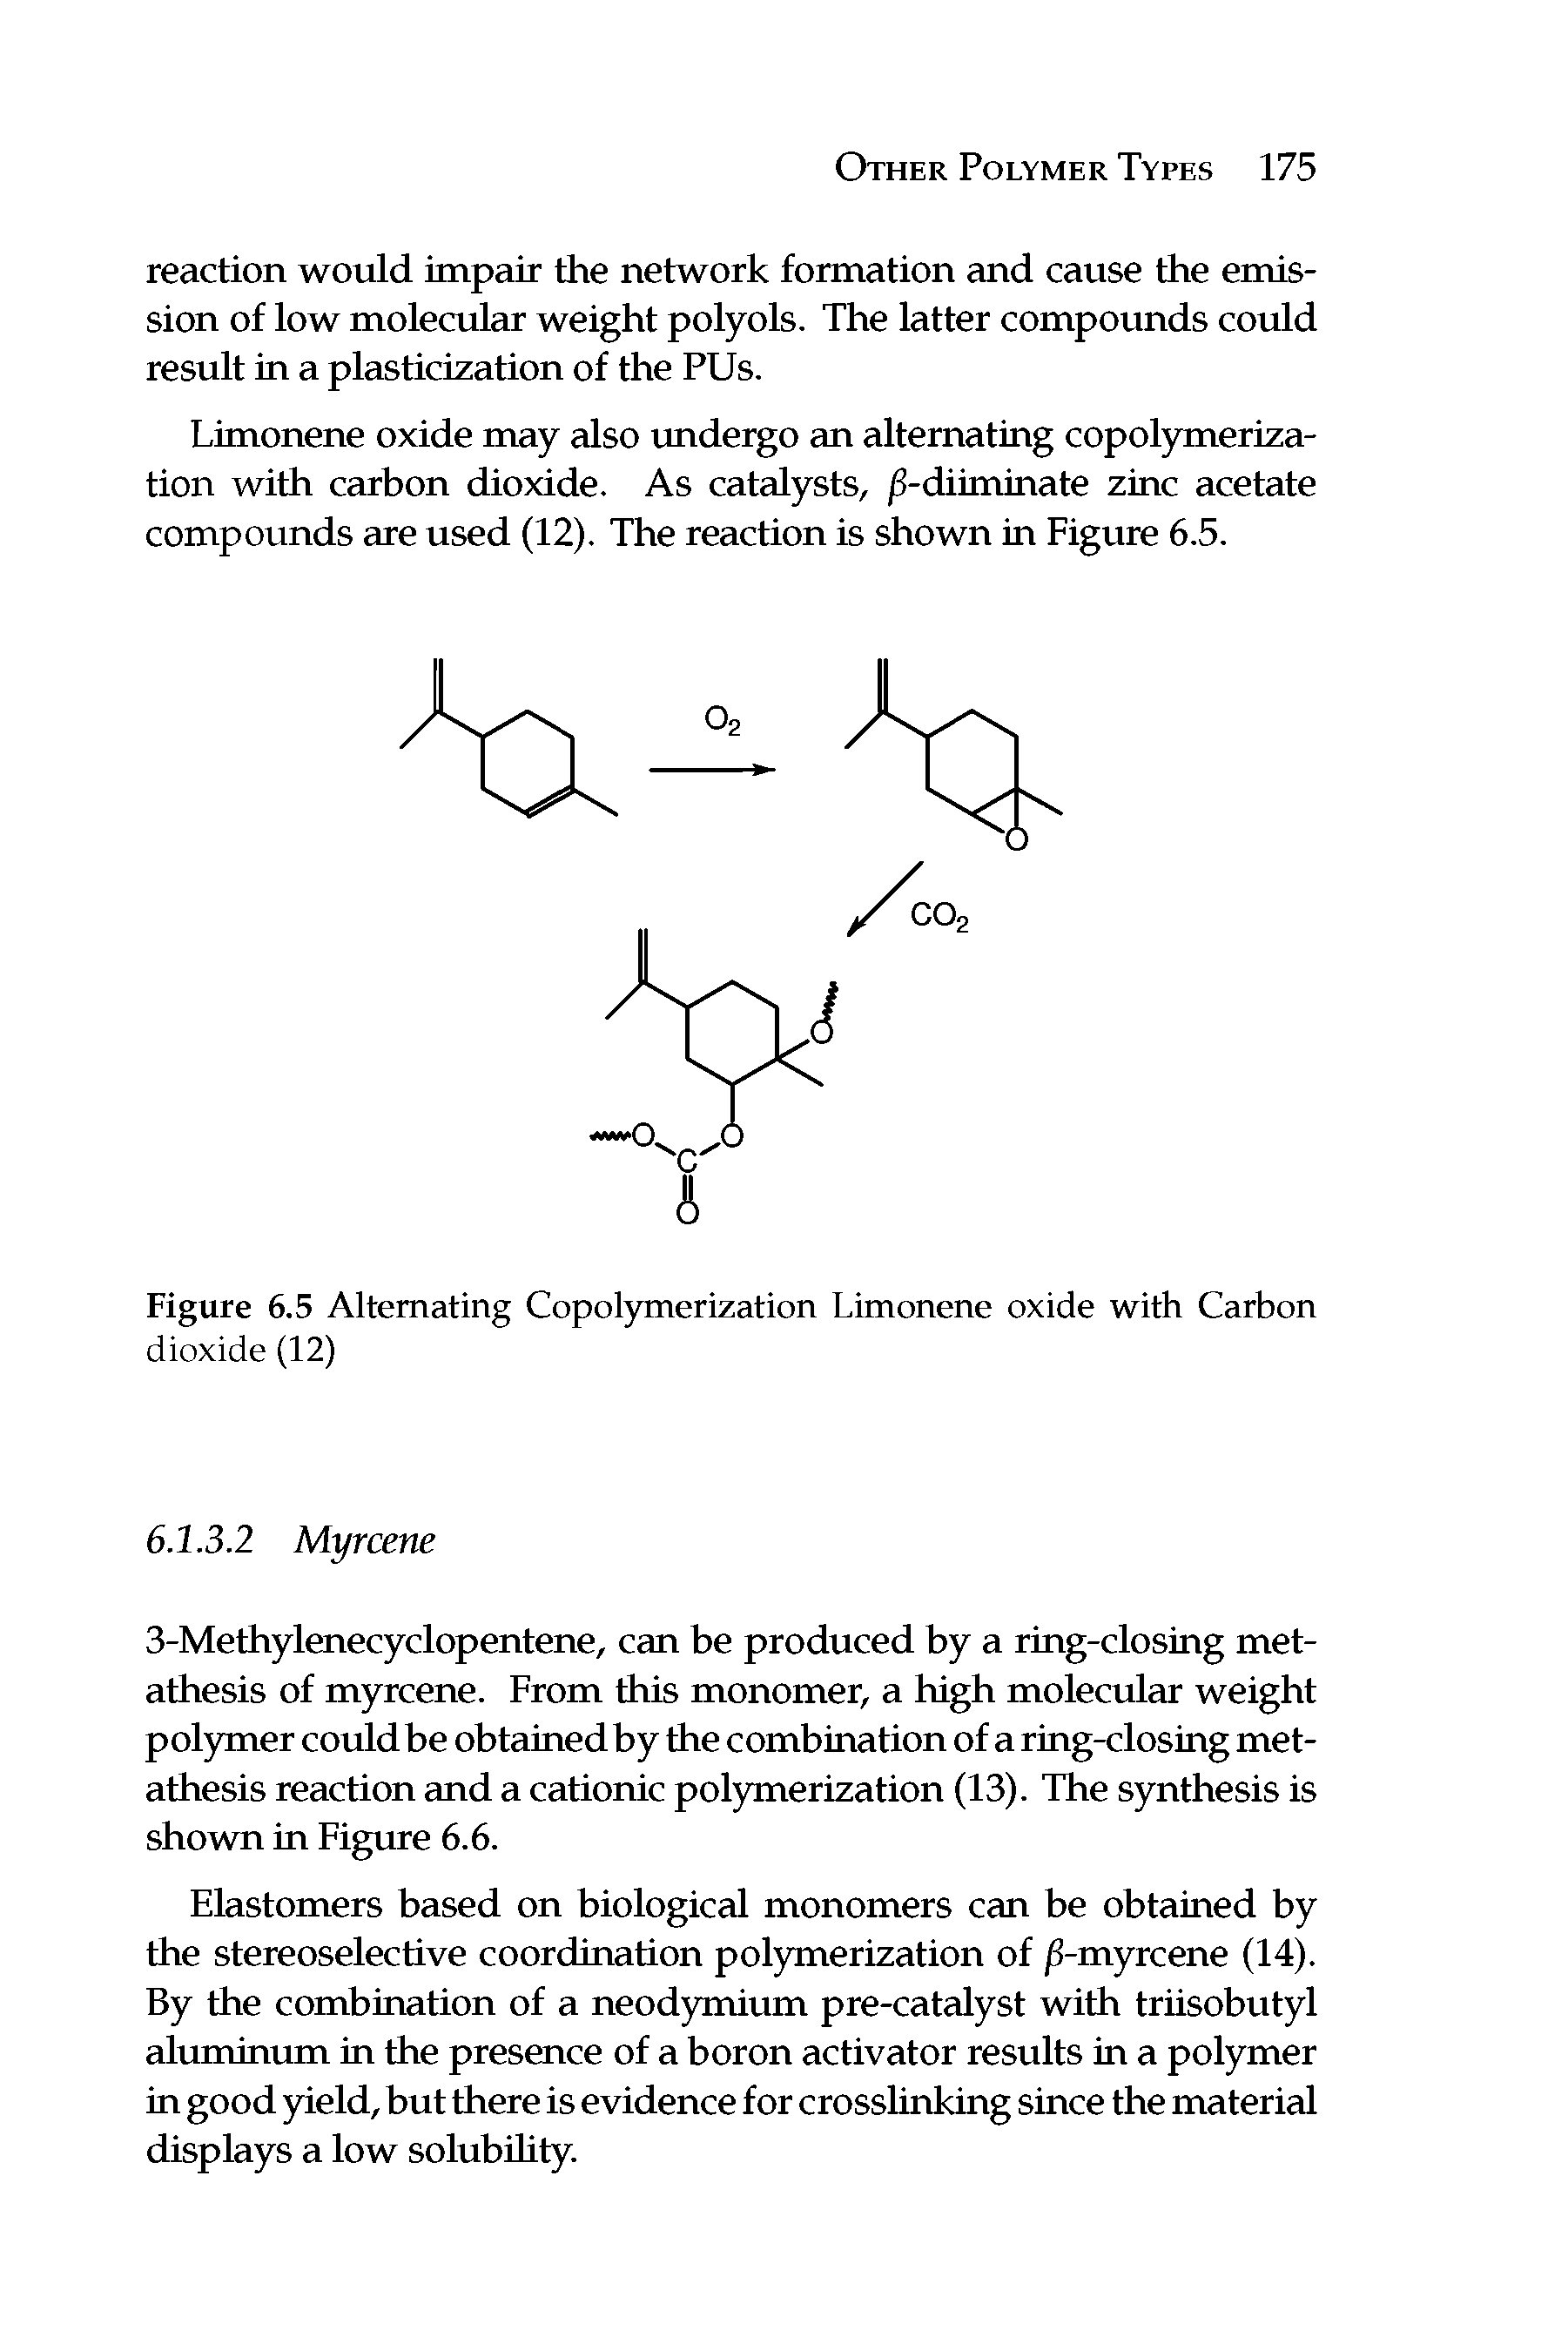 Figure 6.5 Alternating Copol)mierization Limonene oxide with Carbon dioxide (12)...